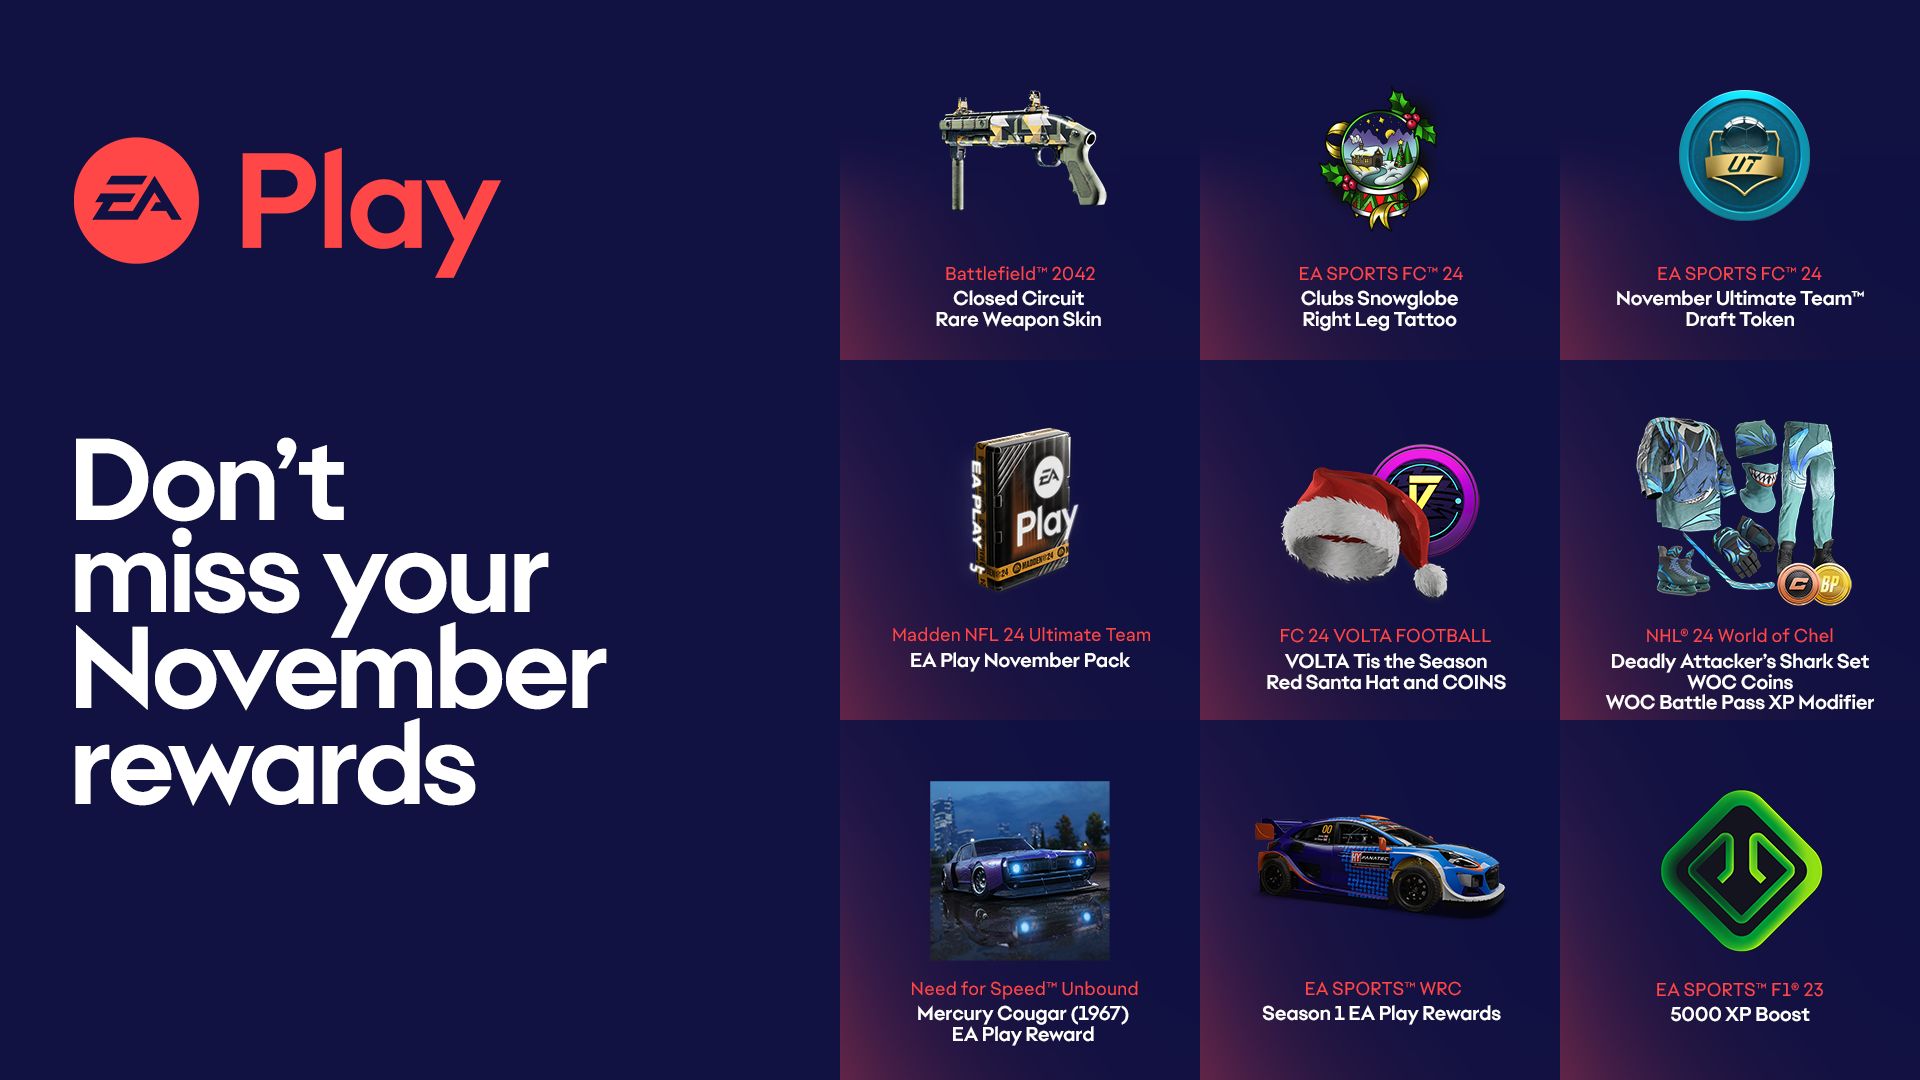 EA Play Member Rewards - November